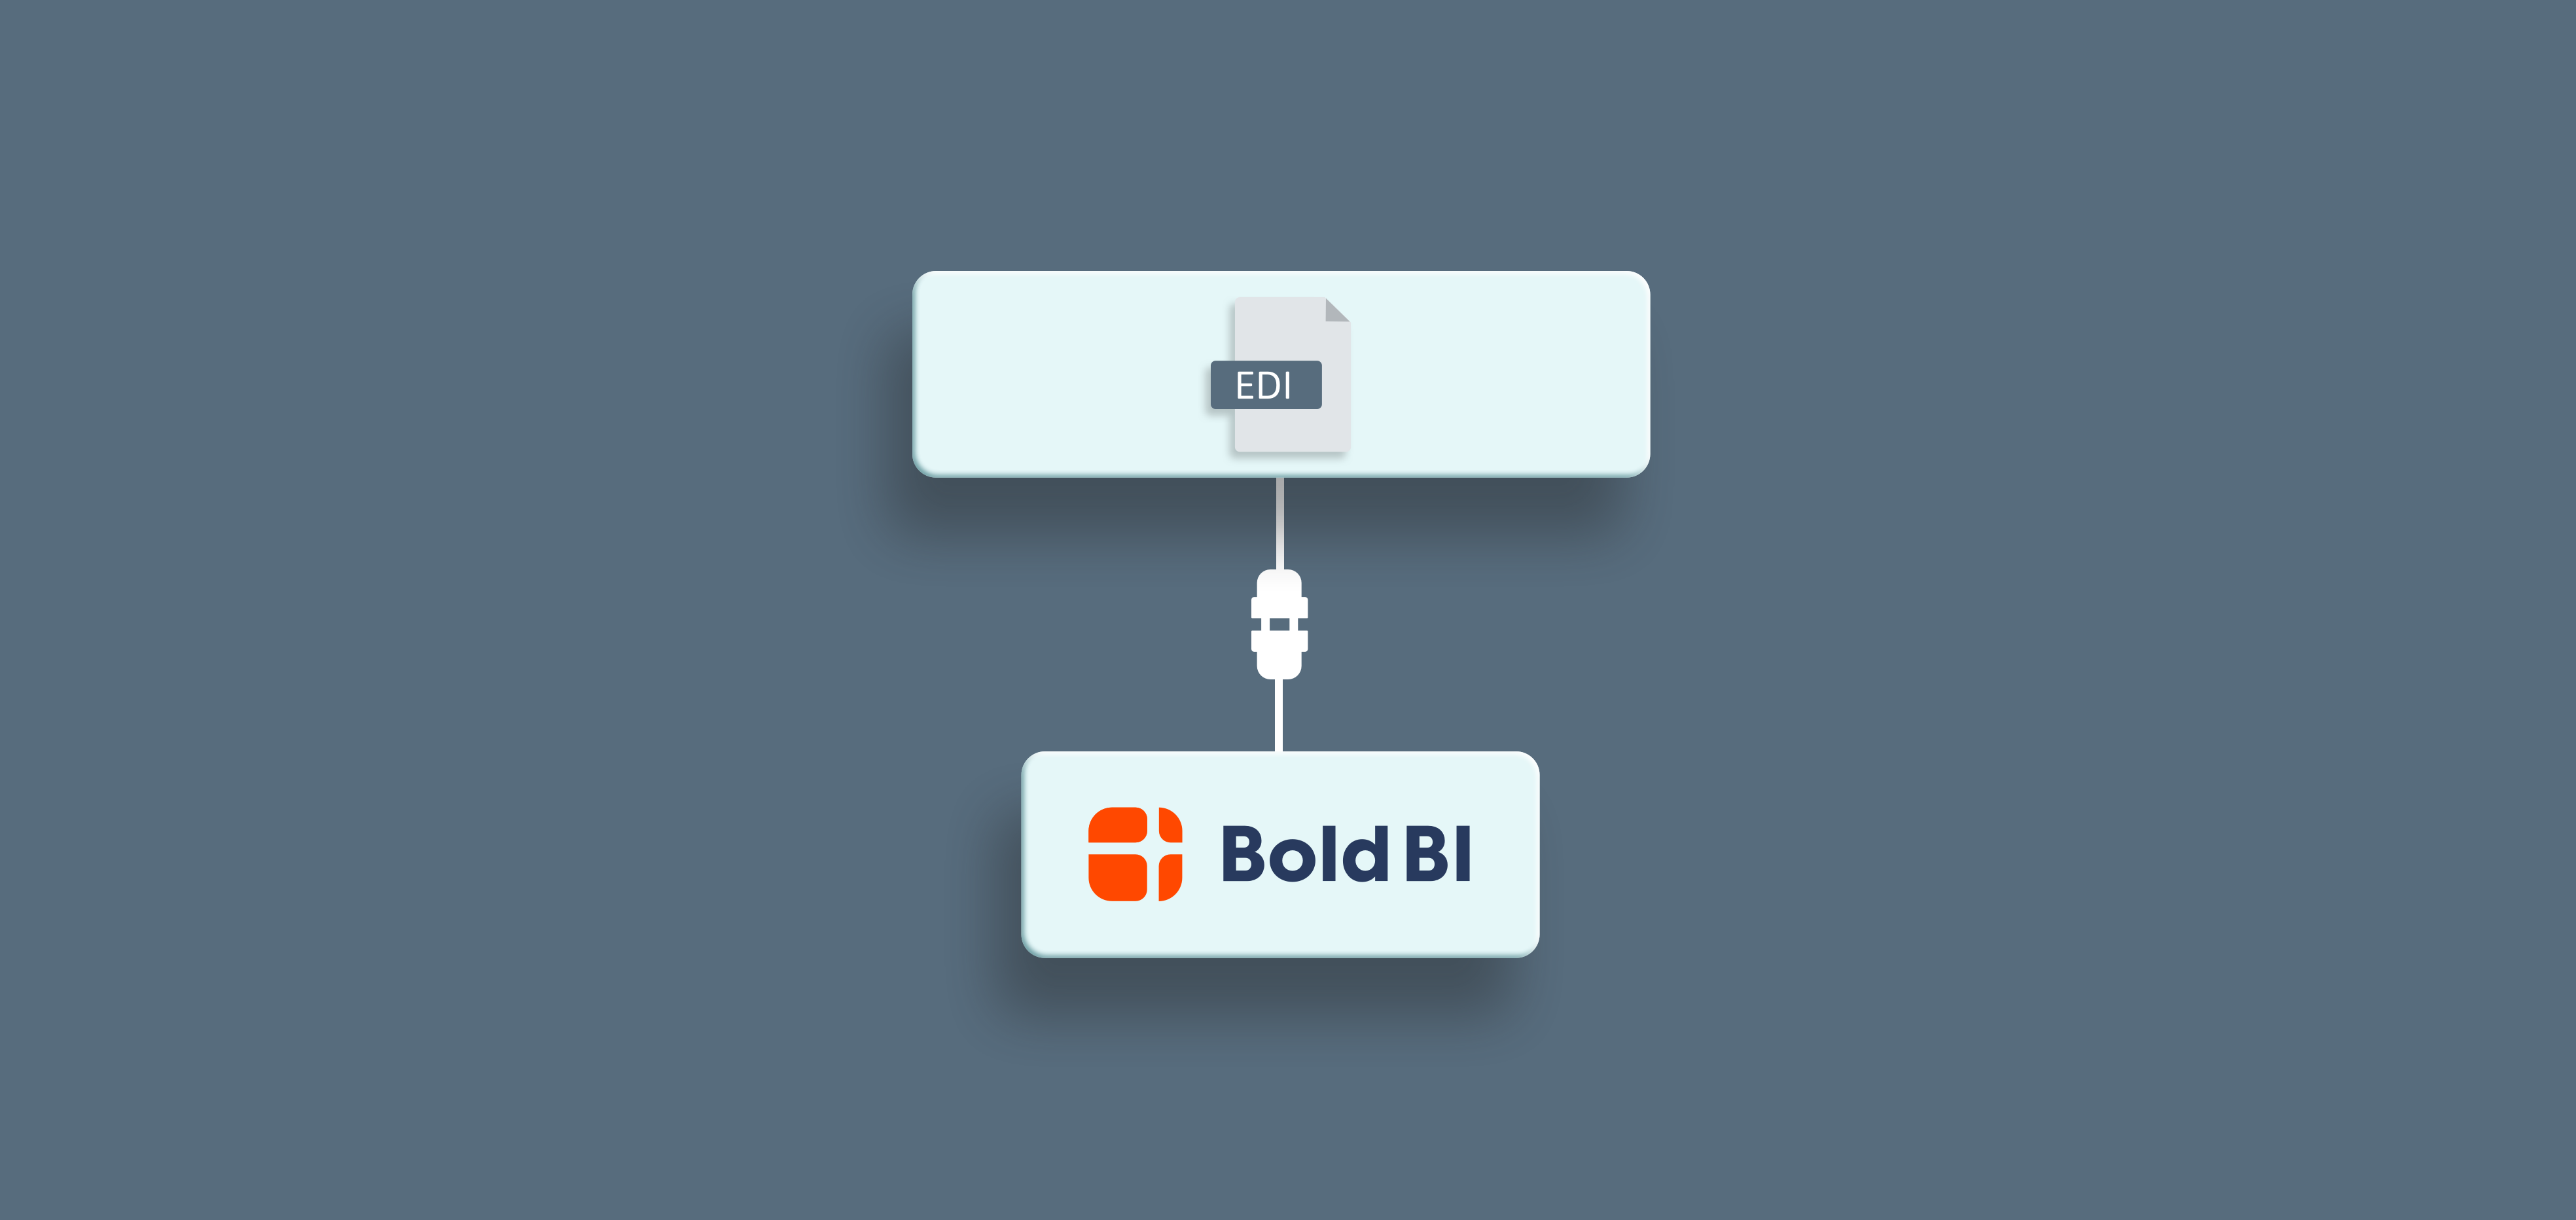 Connecting Bold BI to EDI data source